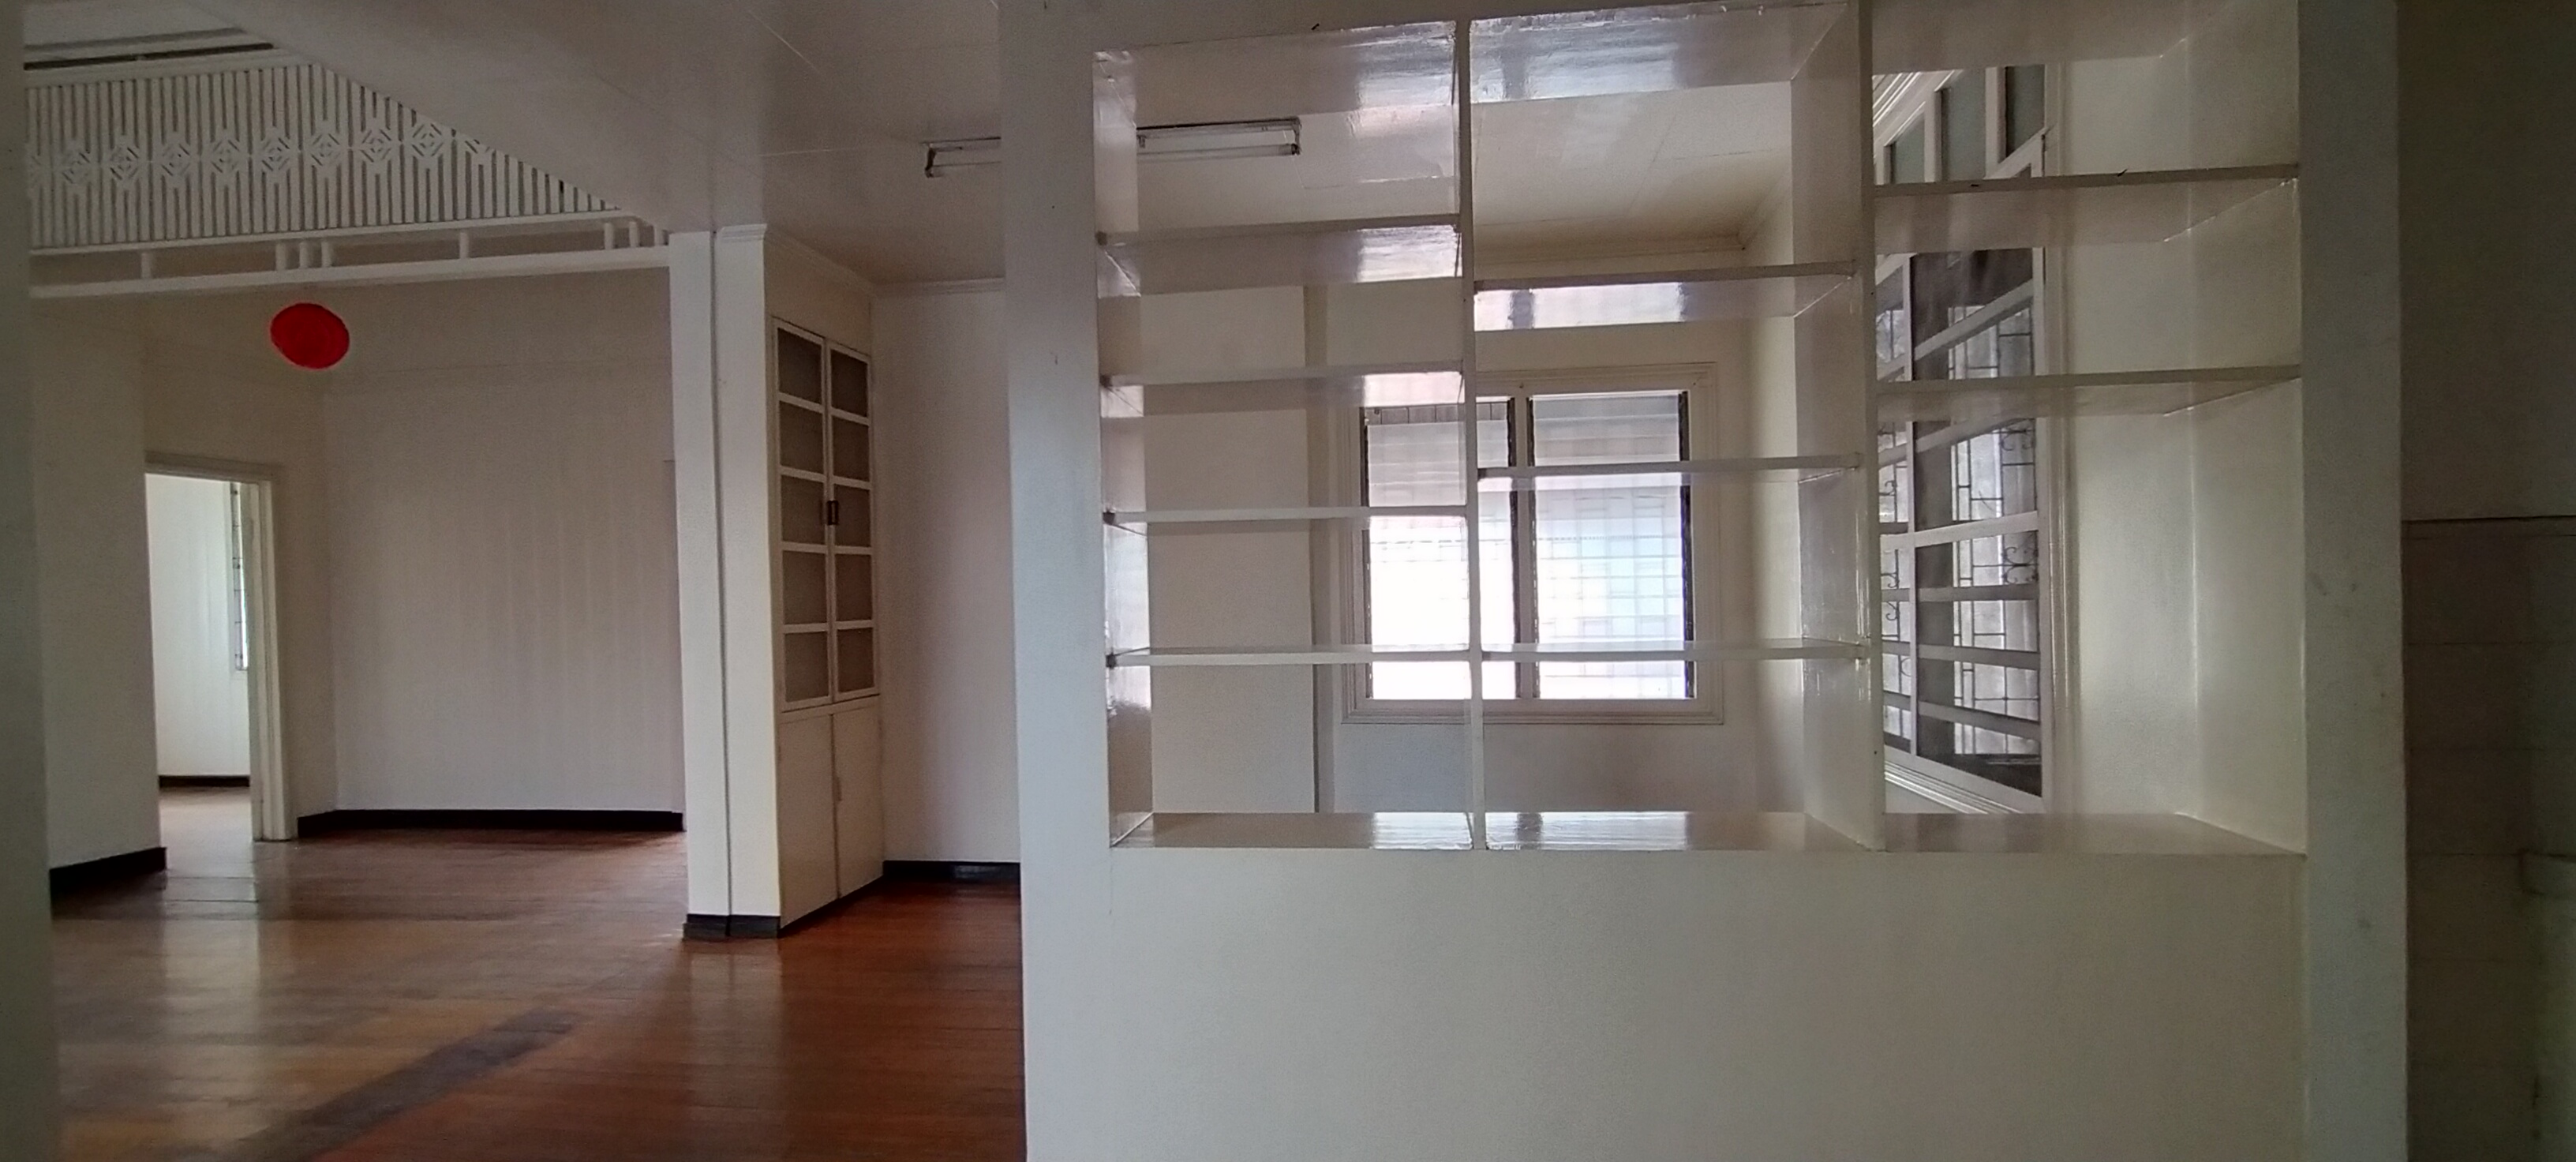 3-bedrooms-apartment-located-in-sepulveda-cebu-city